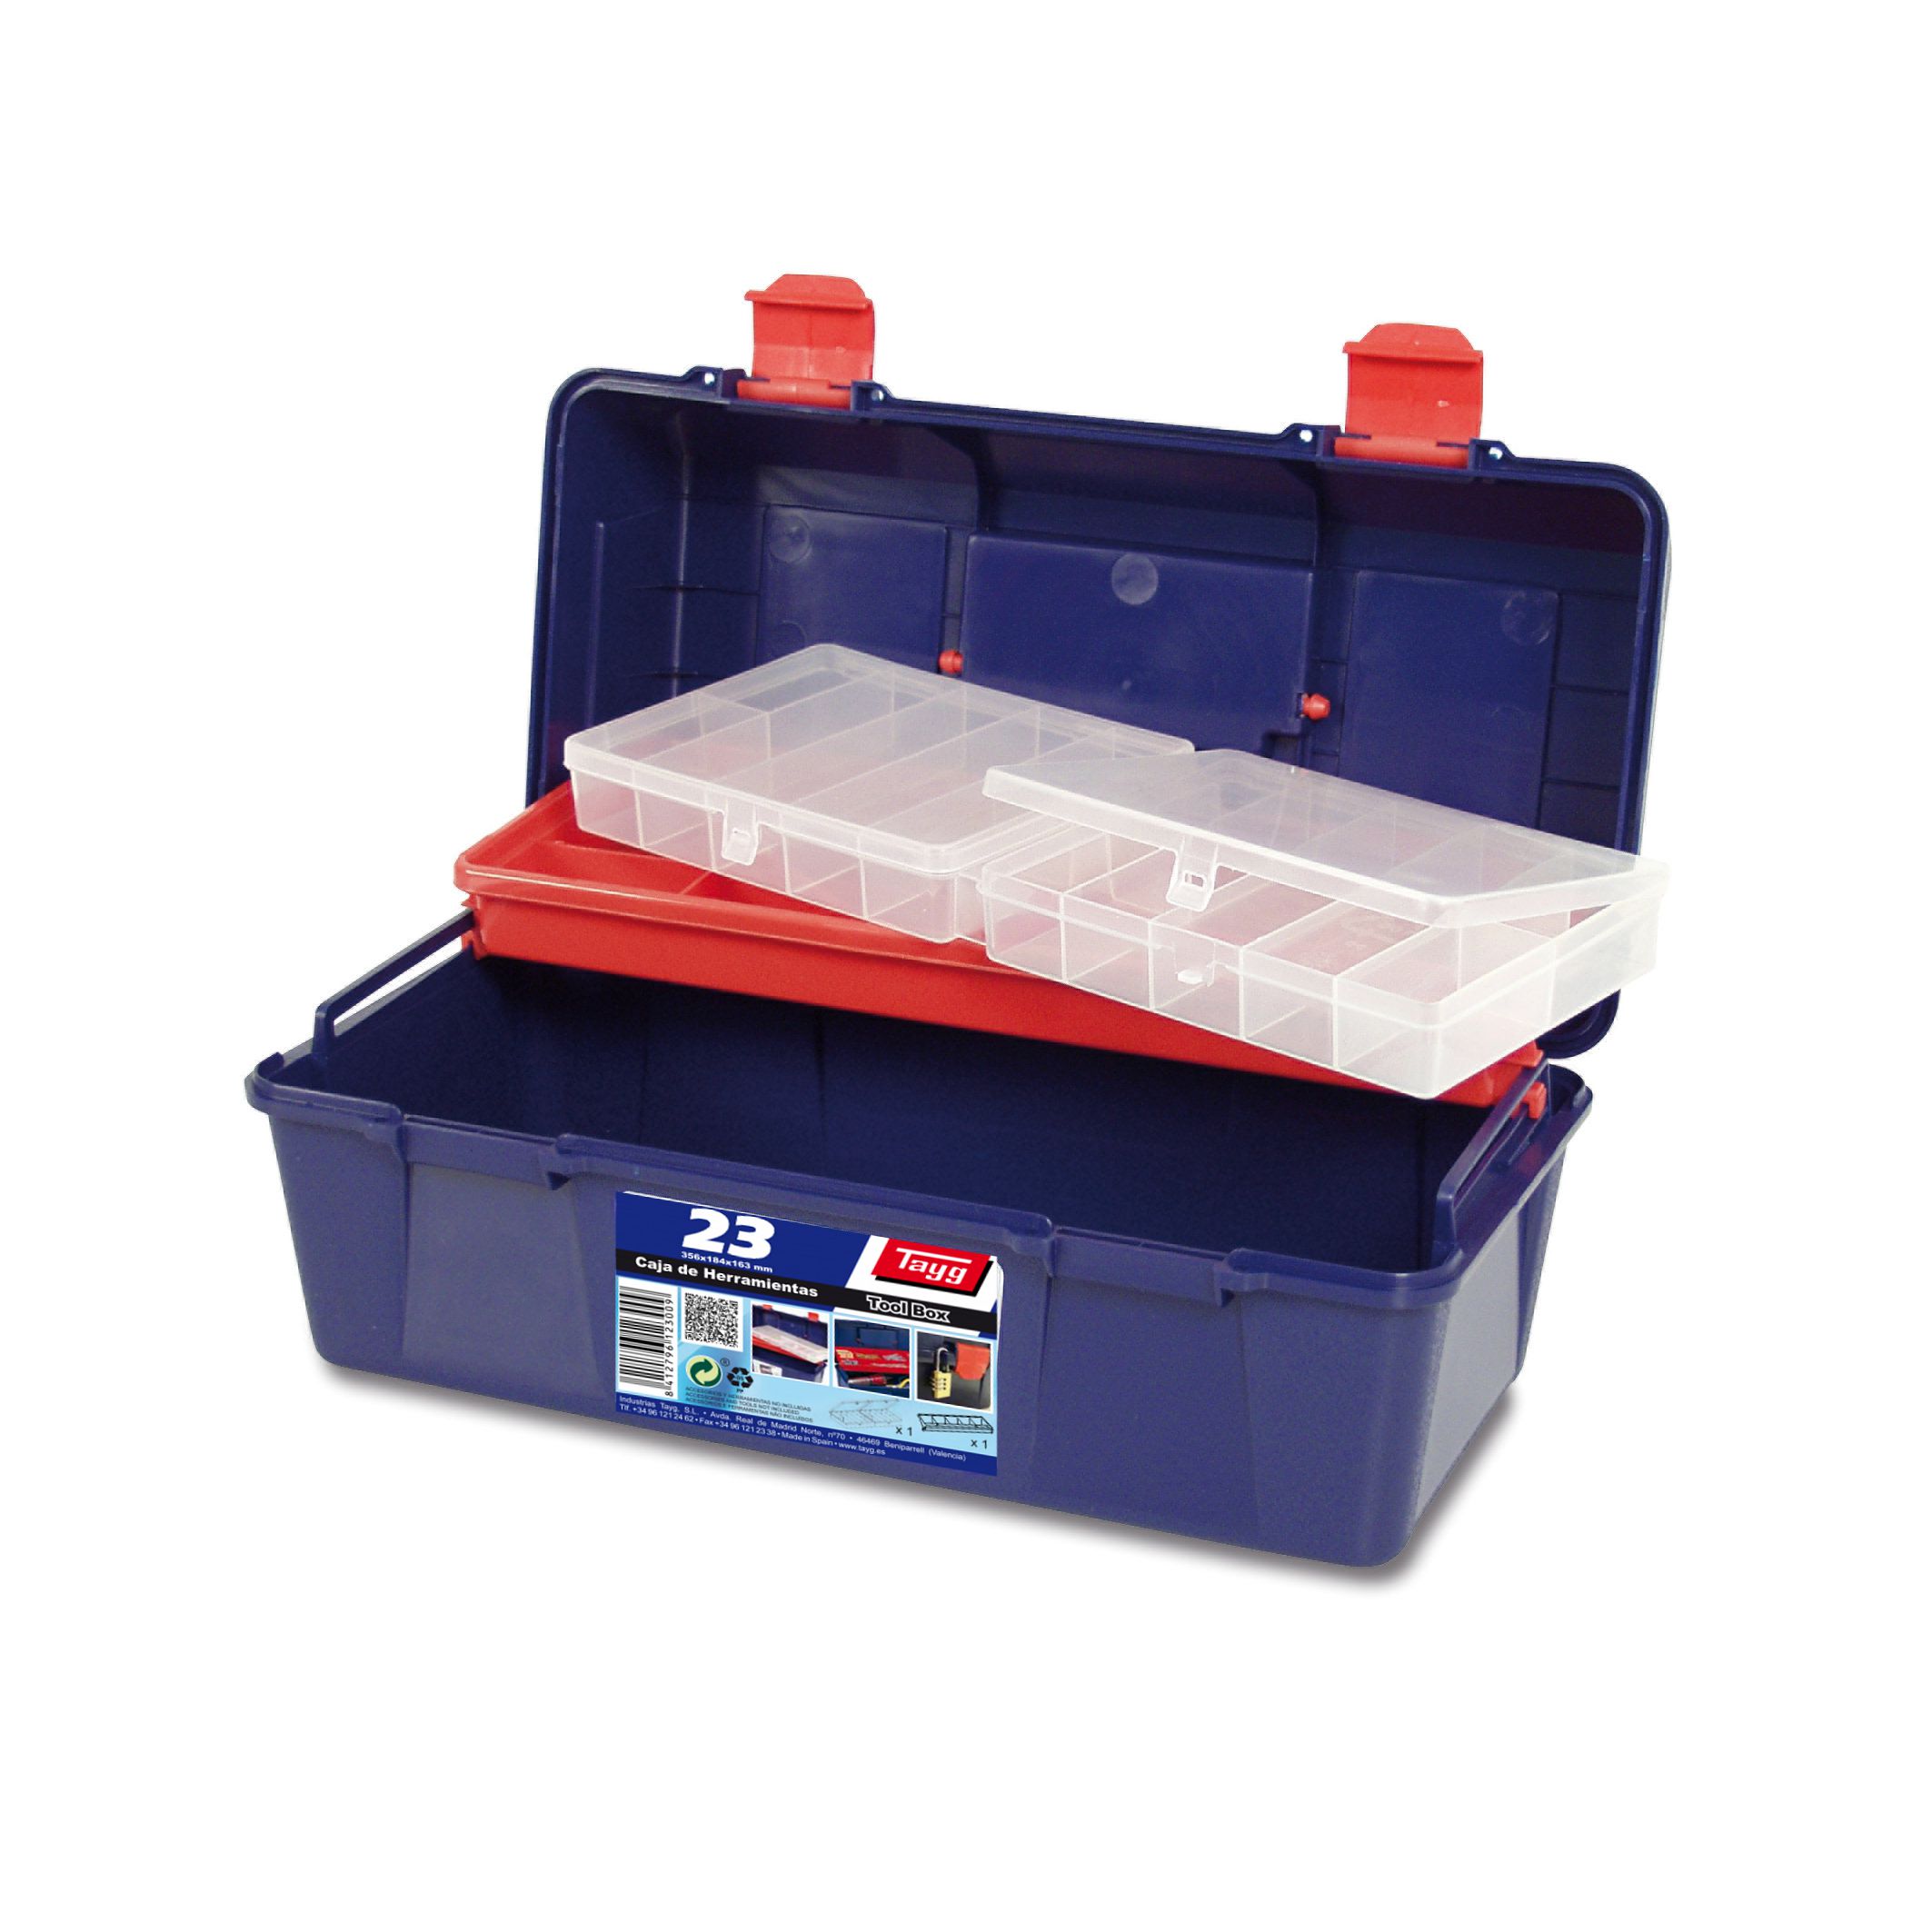 Ящик пластиковый для инструментов Tayg Box 23 Caja htas, с 2 органайзерами, 35,6х18,4х16,3 см, синий (123009) - фото 5